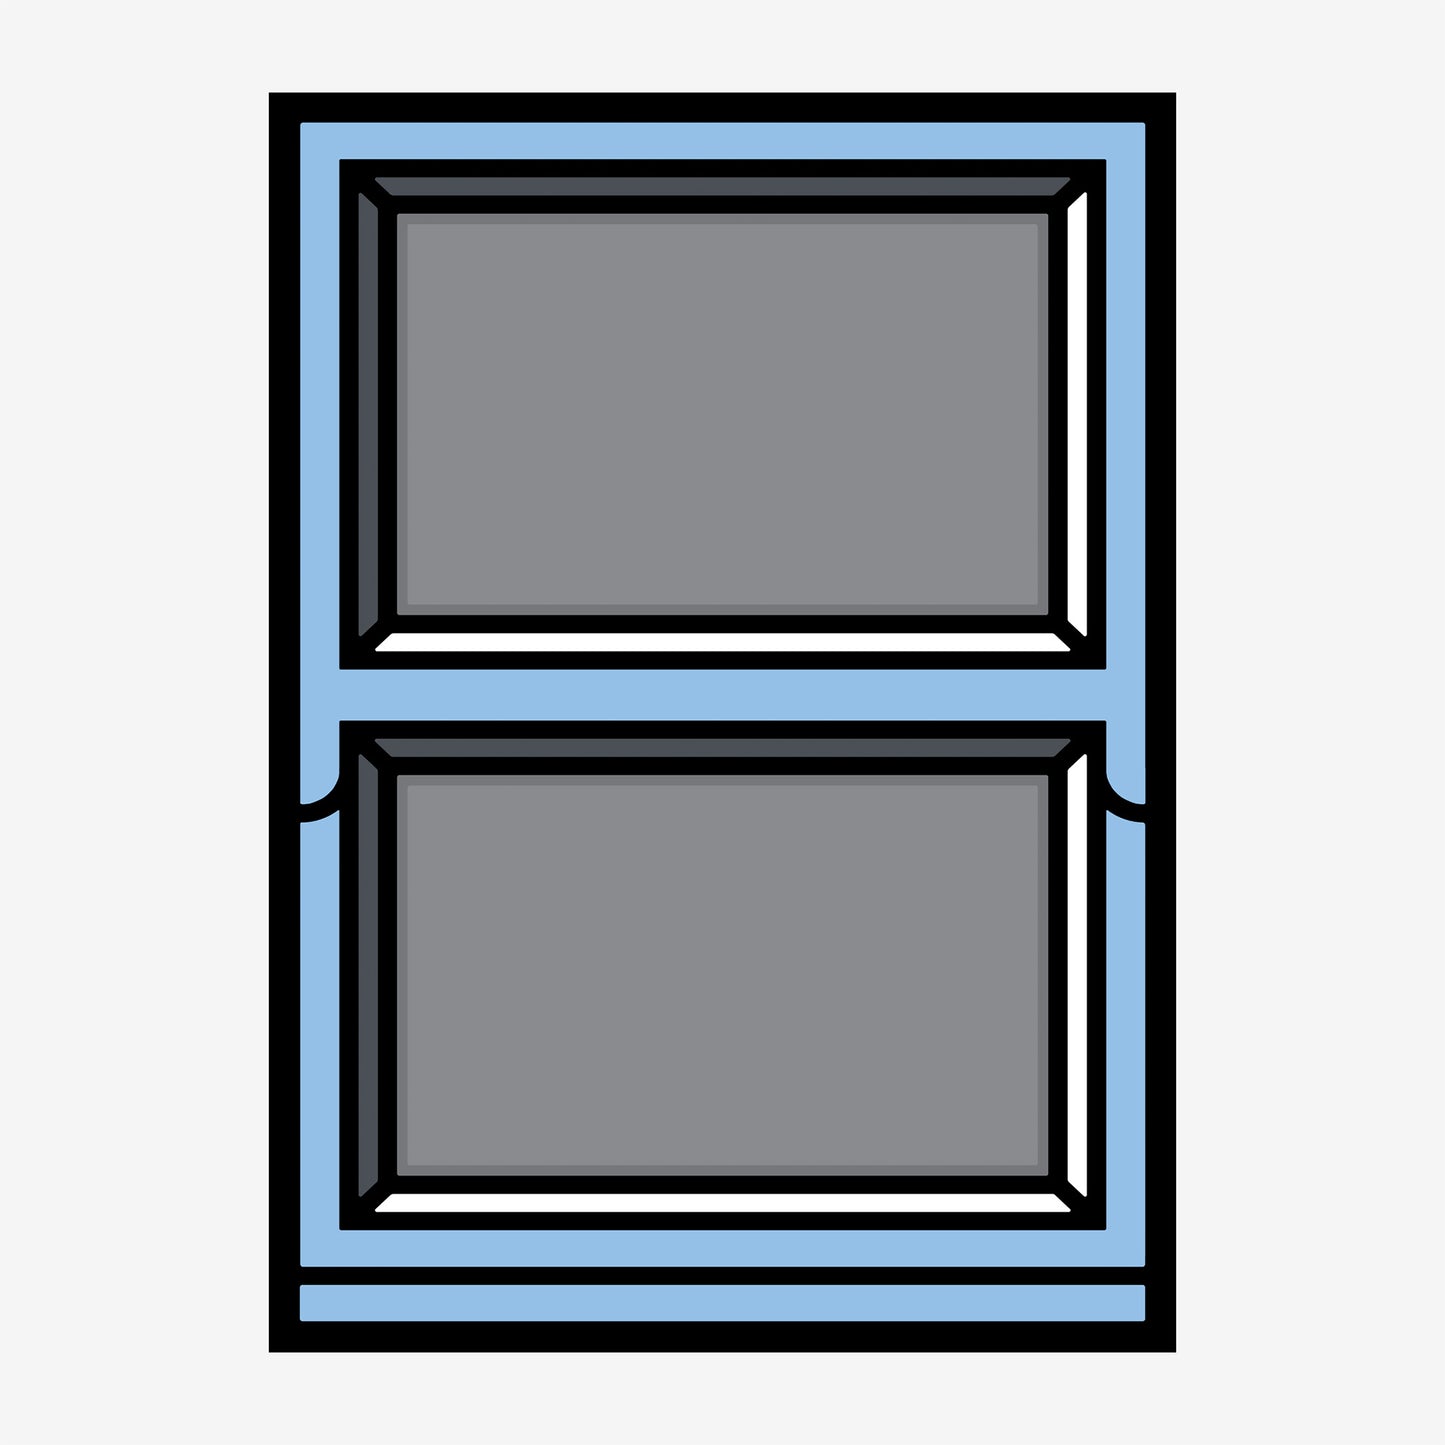 The Wrong Shop Window 3 – Richard Woods, 50x70cm